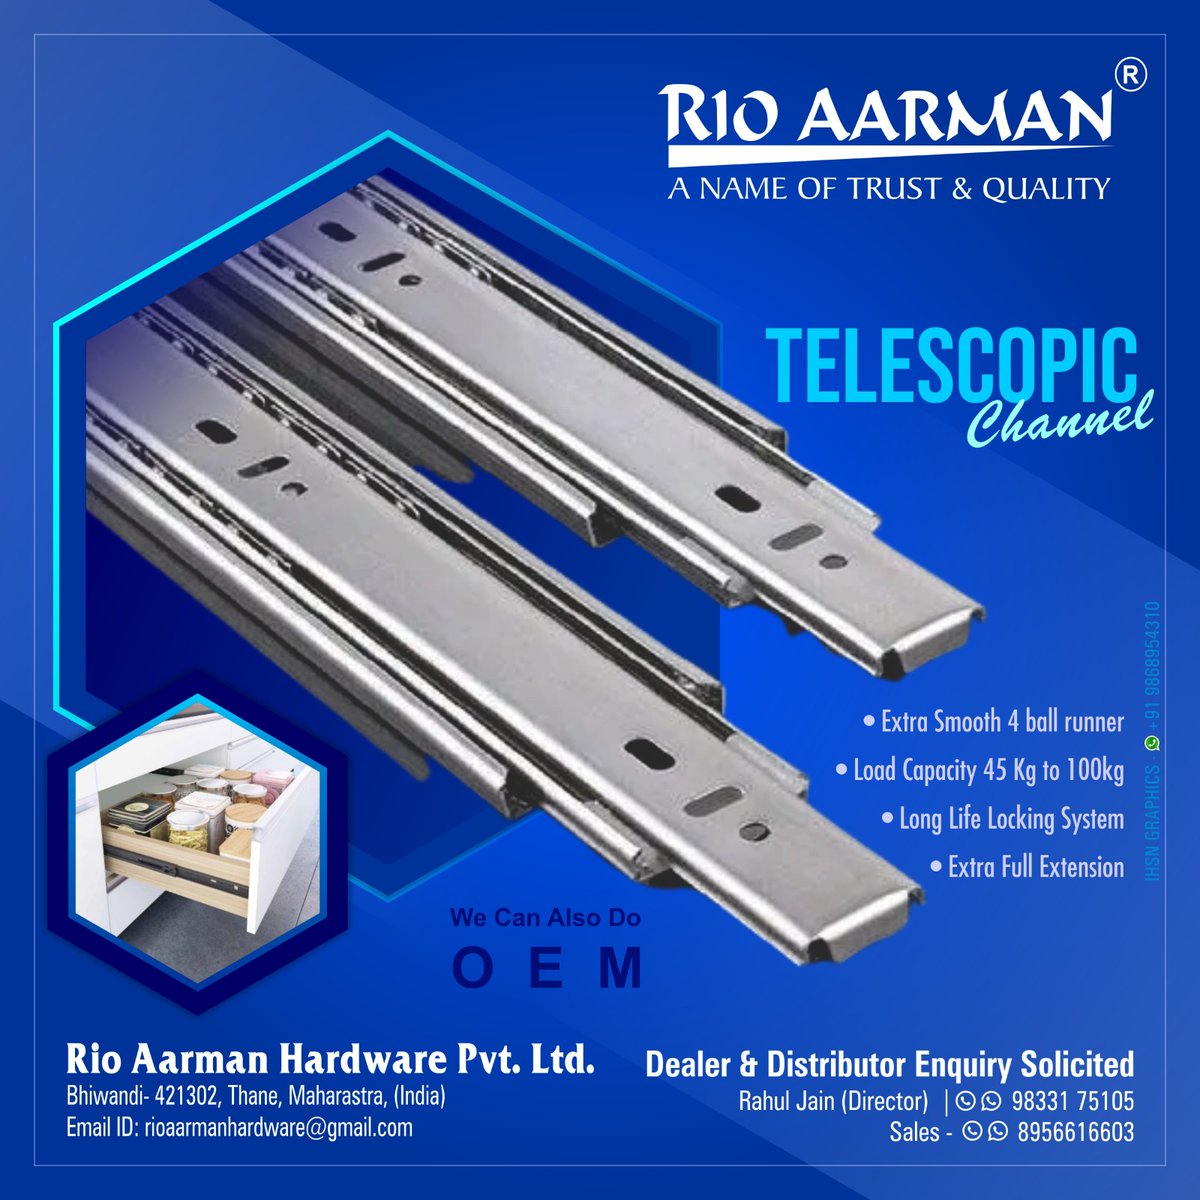 “𝐑𝐈𝐎 𝐀𝐀𝐑𝐌𝐀𝐍 𝐇𝐀𝐑𝐃𝐖𝐀𝐑𝐄' Brings Premium Range of Telescopic channel in best And premium Quality.

#rioaarmanhardware #Aaro #hardwarestore #AutoHinges #SlidingTrackRollers #Tendombox #hardware #OEM